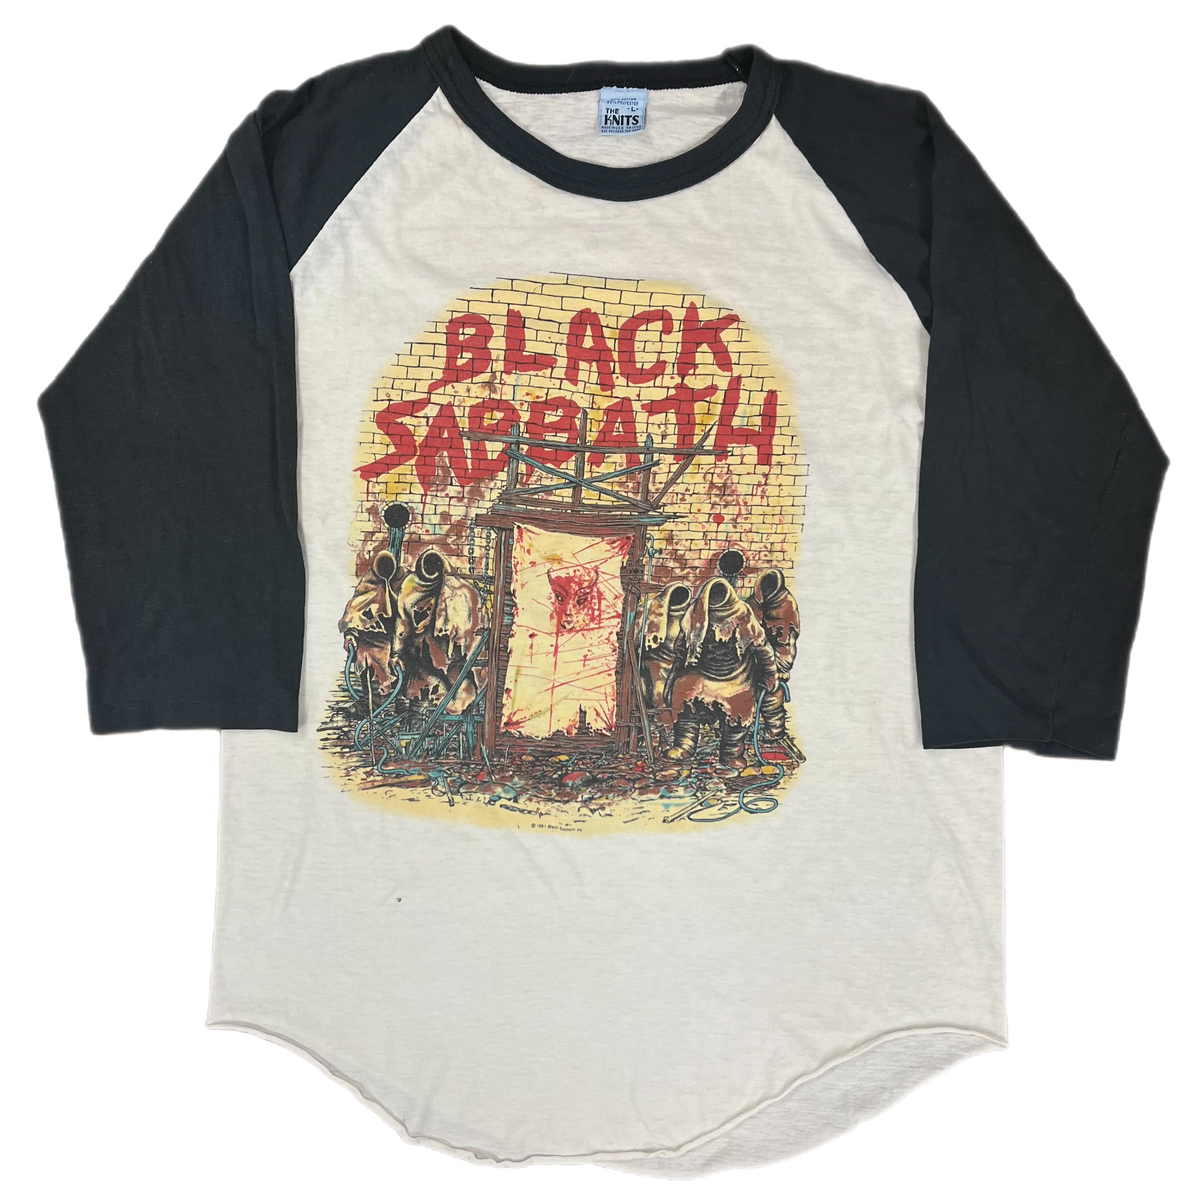 Vintage Black Sabbath “Mob Rules” Raglan Shirt